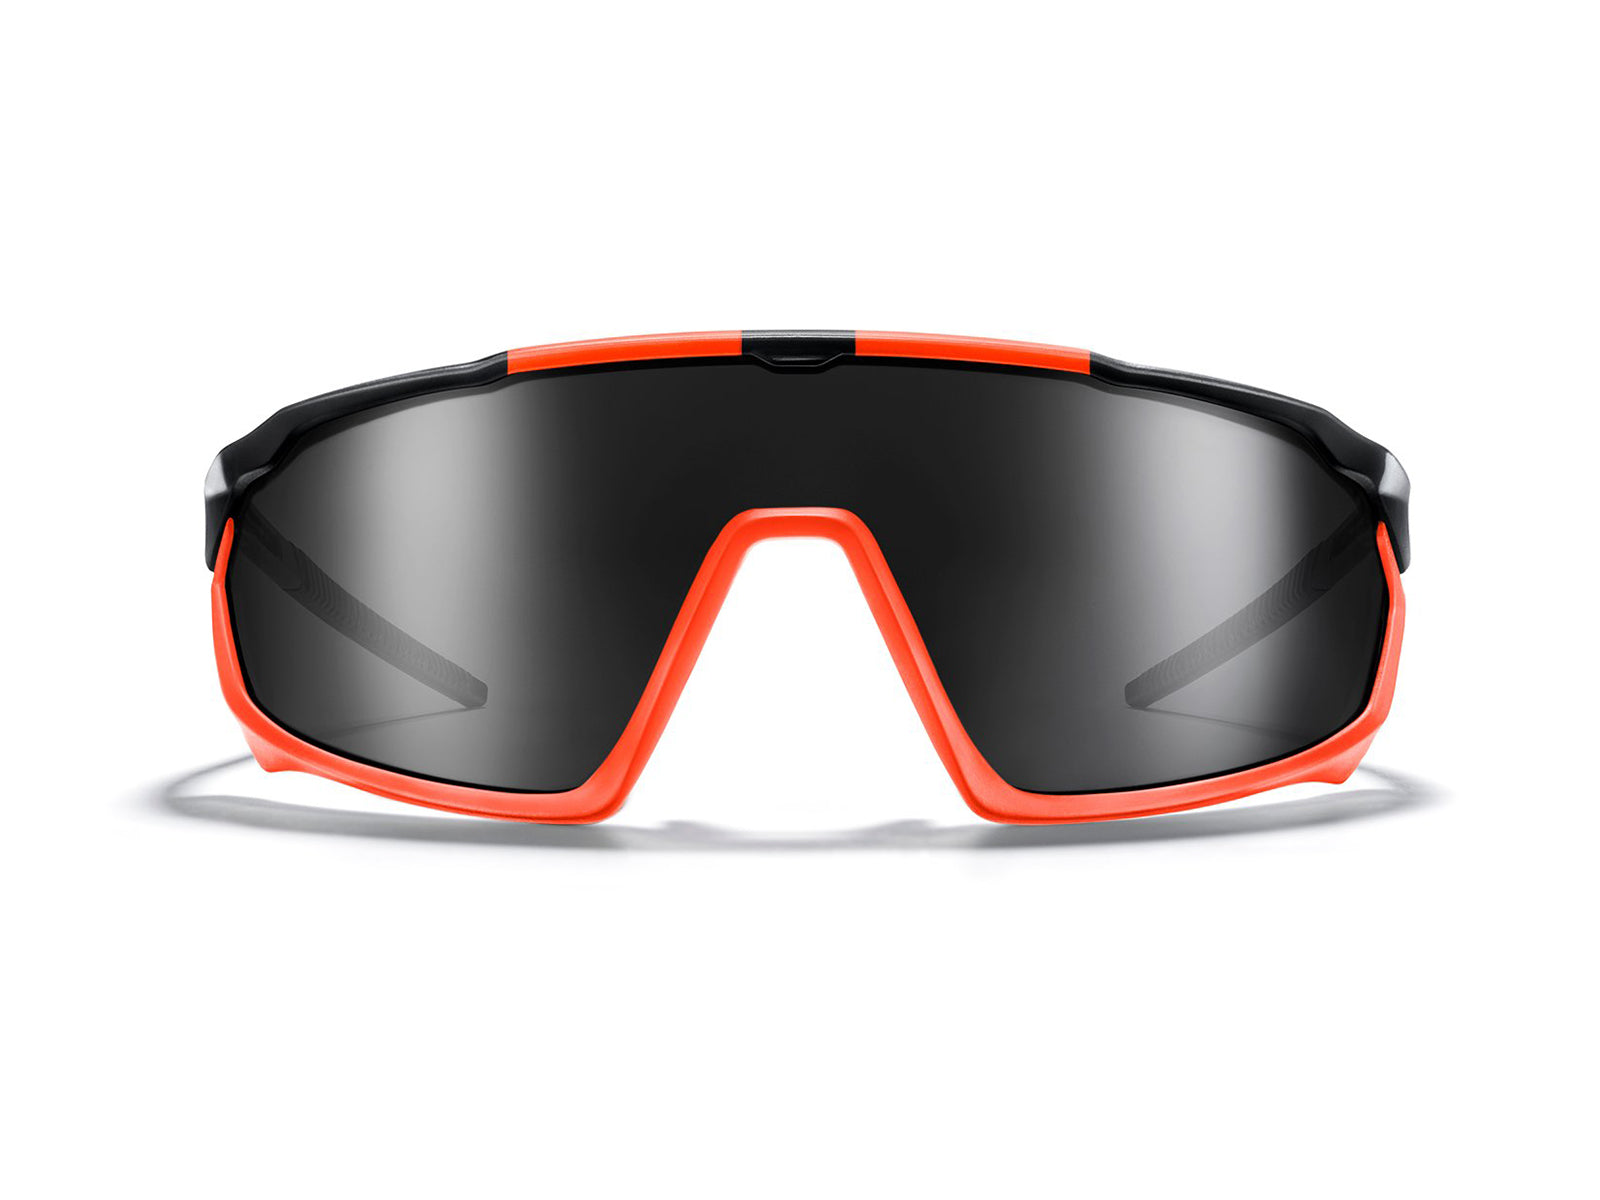 CP-1x Full-Frame Sports Sunglasses